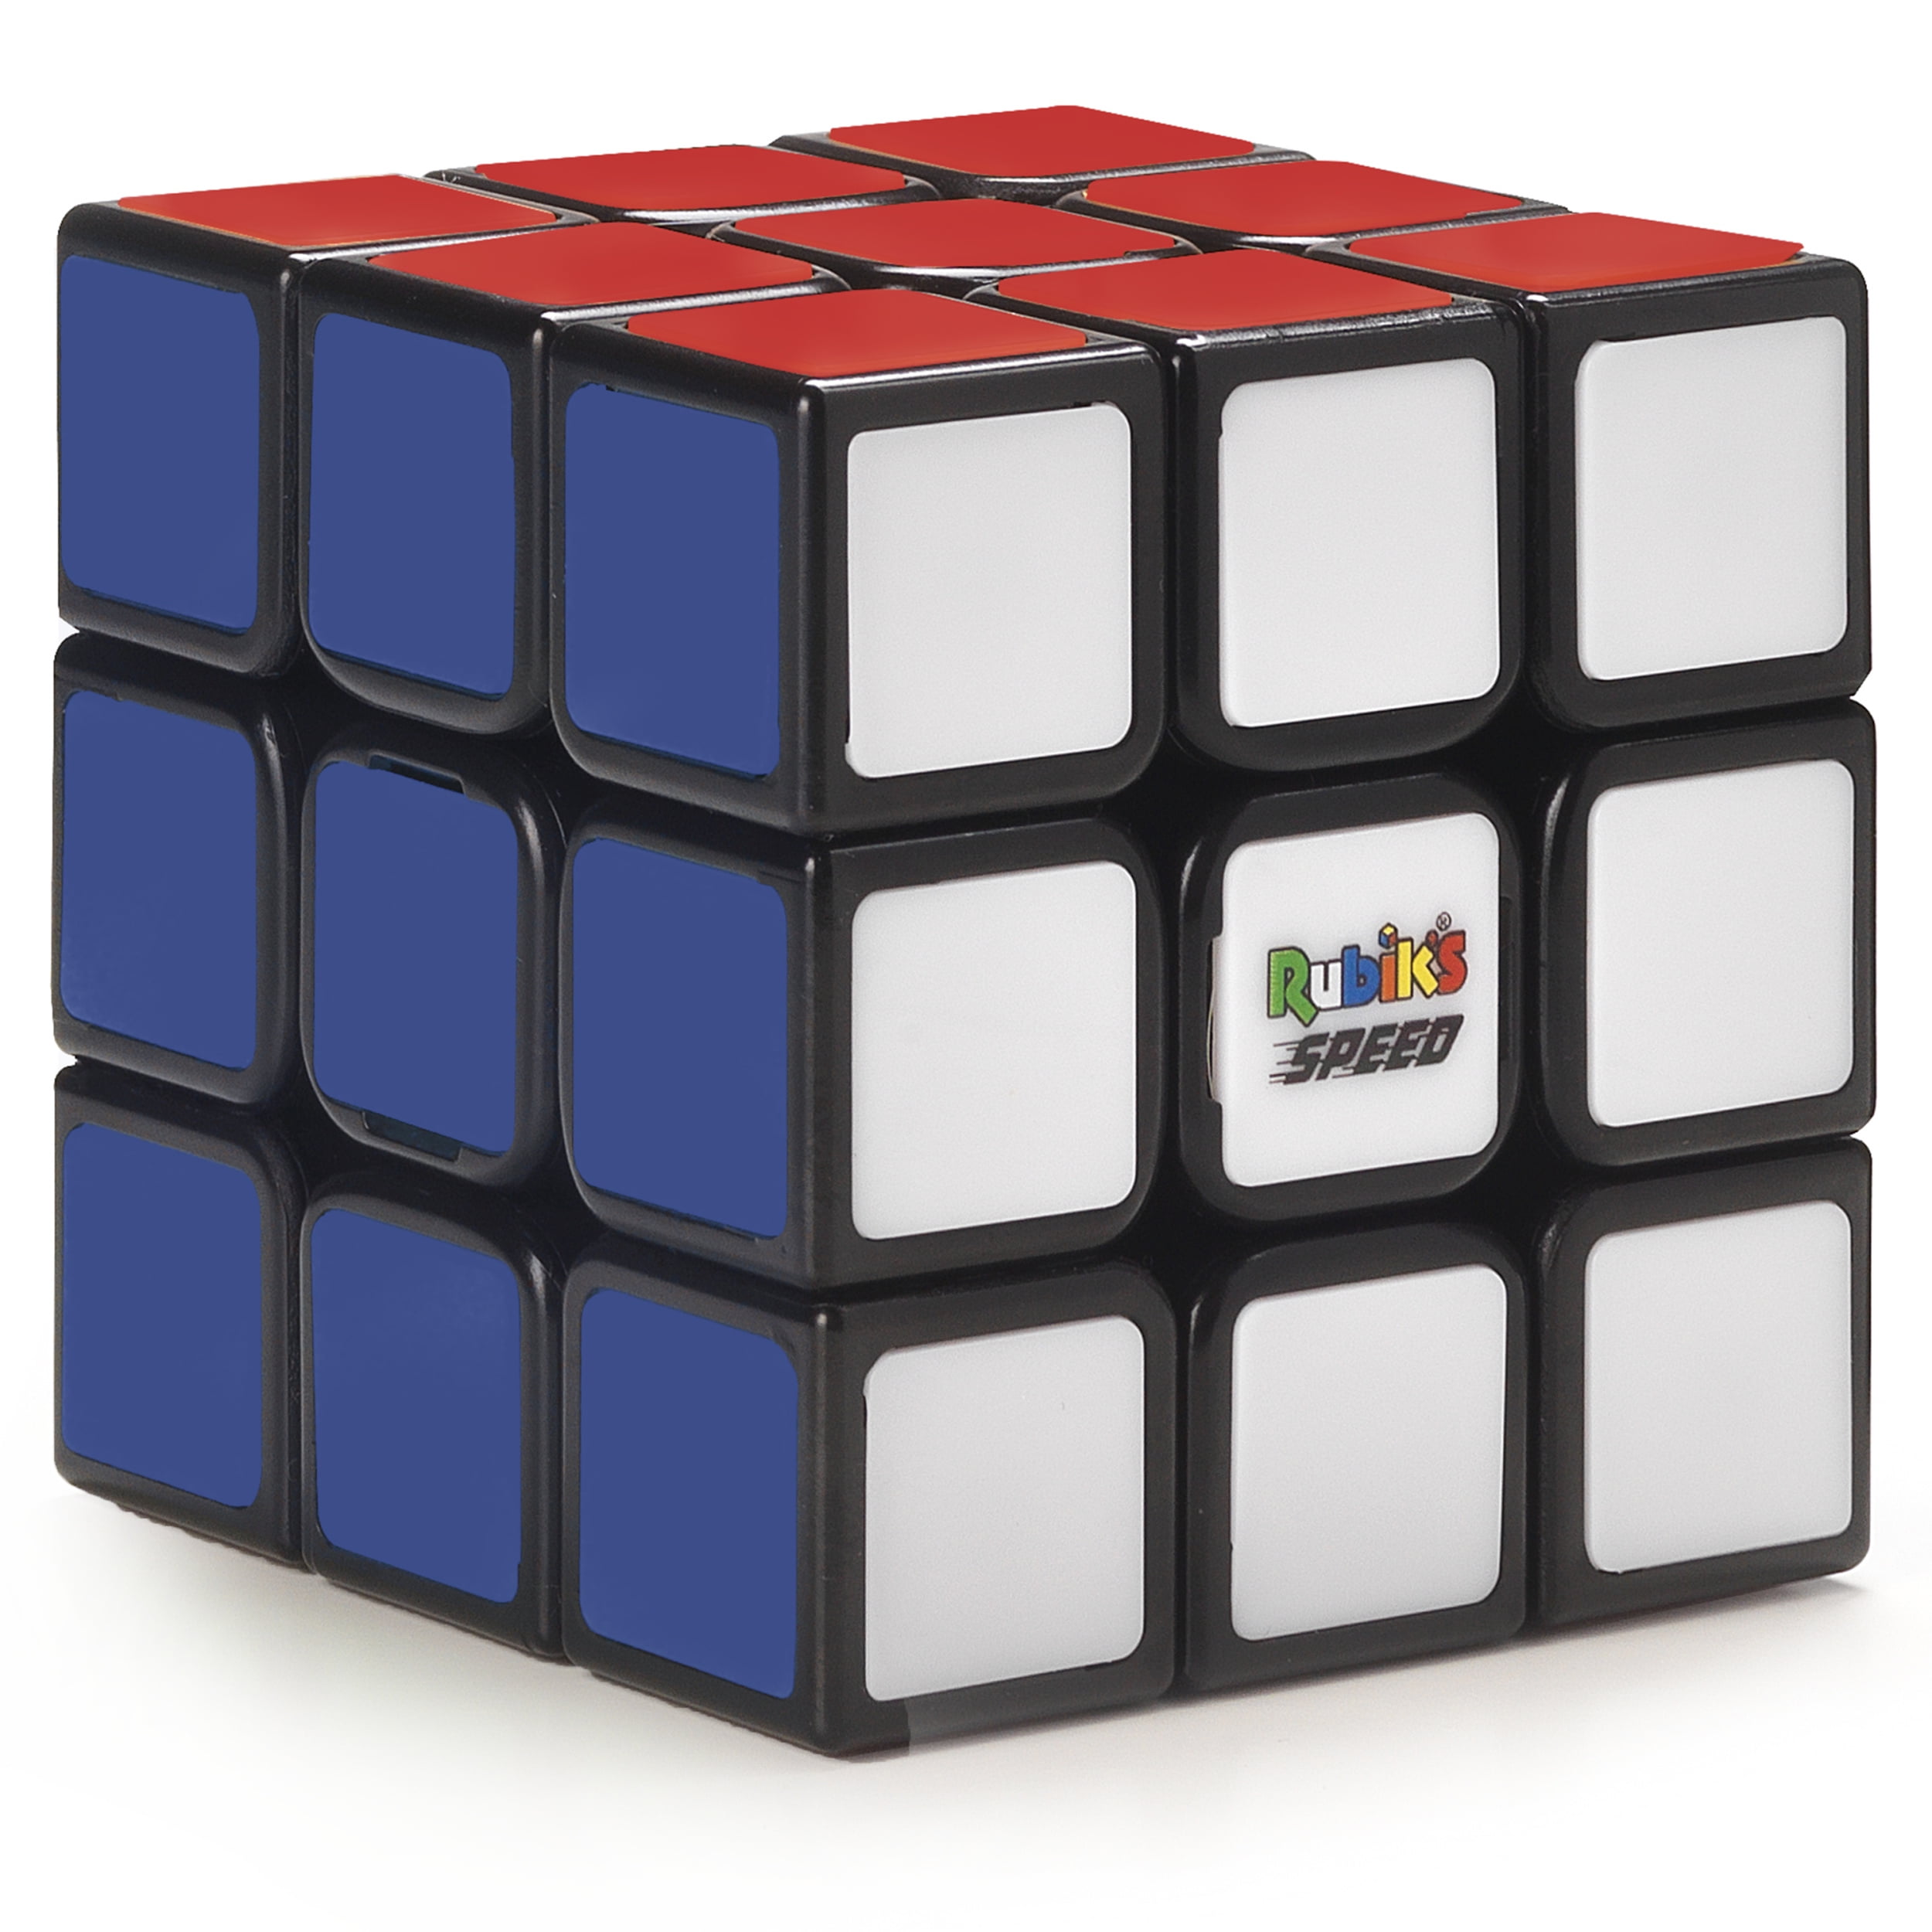 Rubik's Cube 3x3 Speed Magic Rubix 5.6cm Fast turn Original Cube Instruction UK 